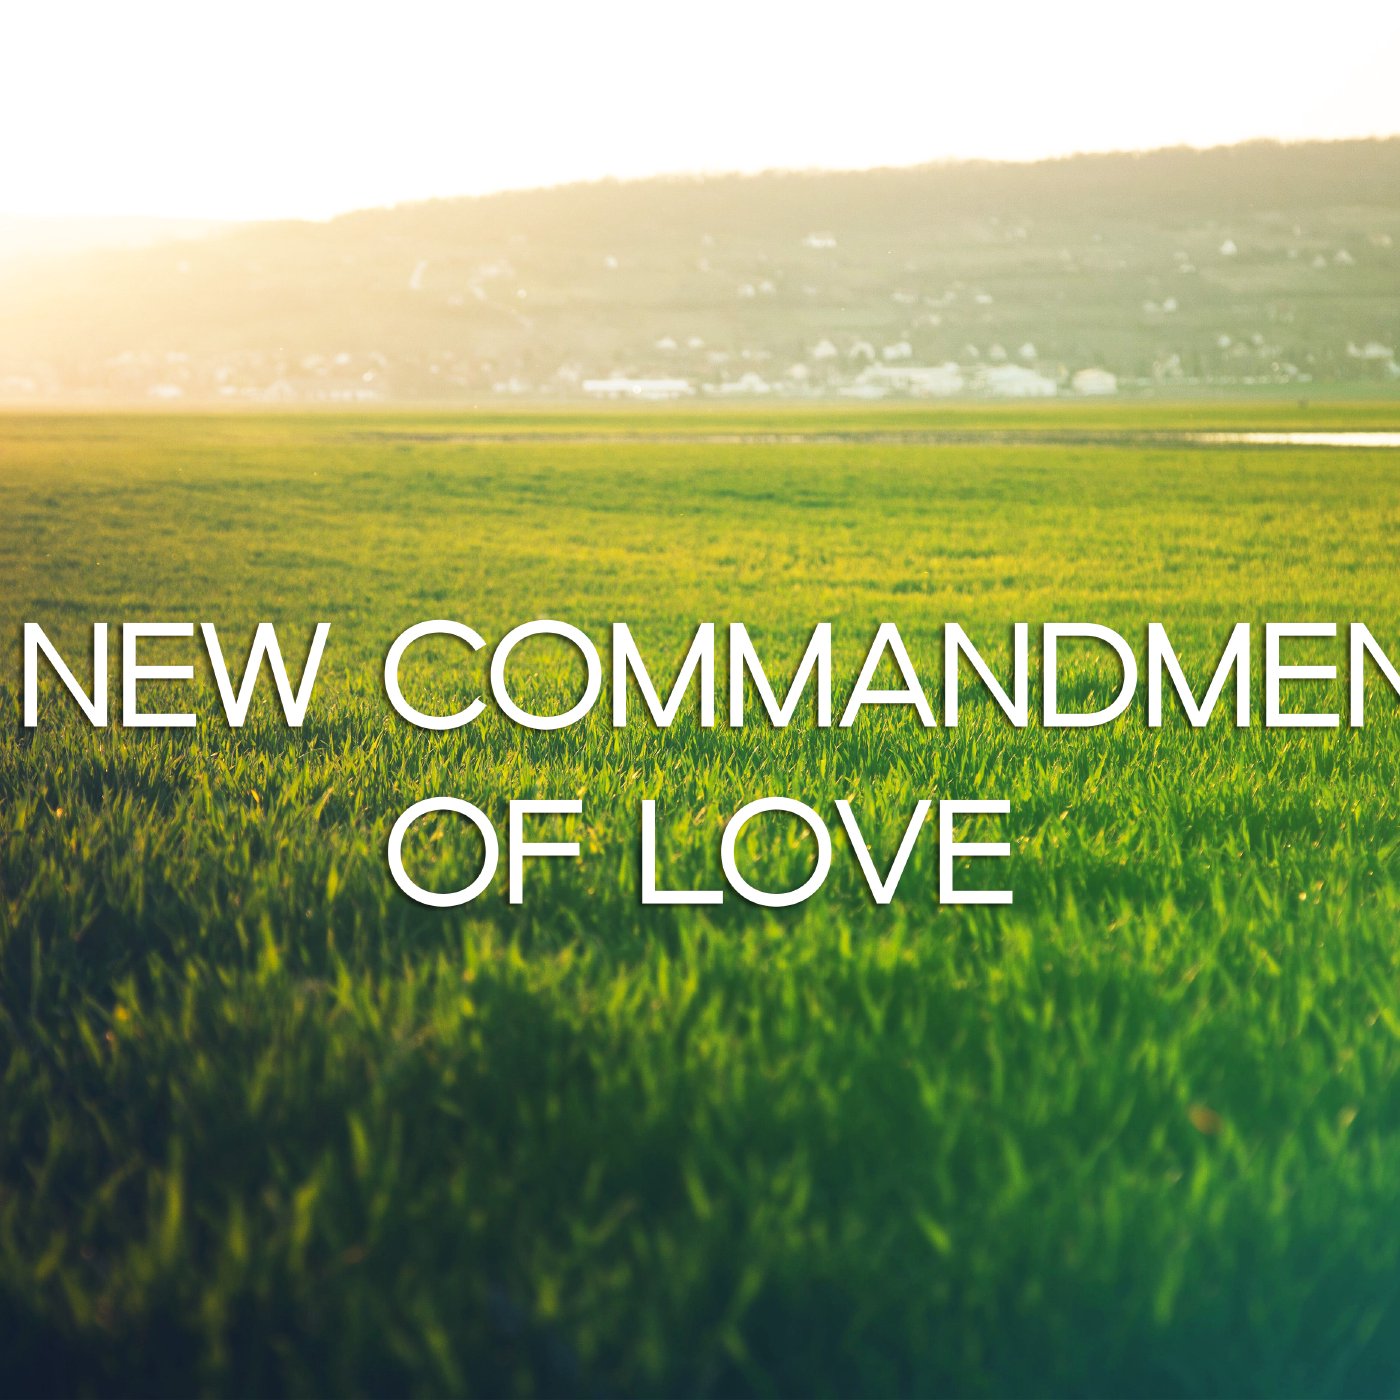 A New Commandment of Love